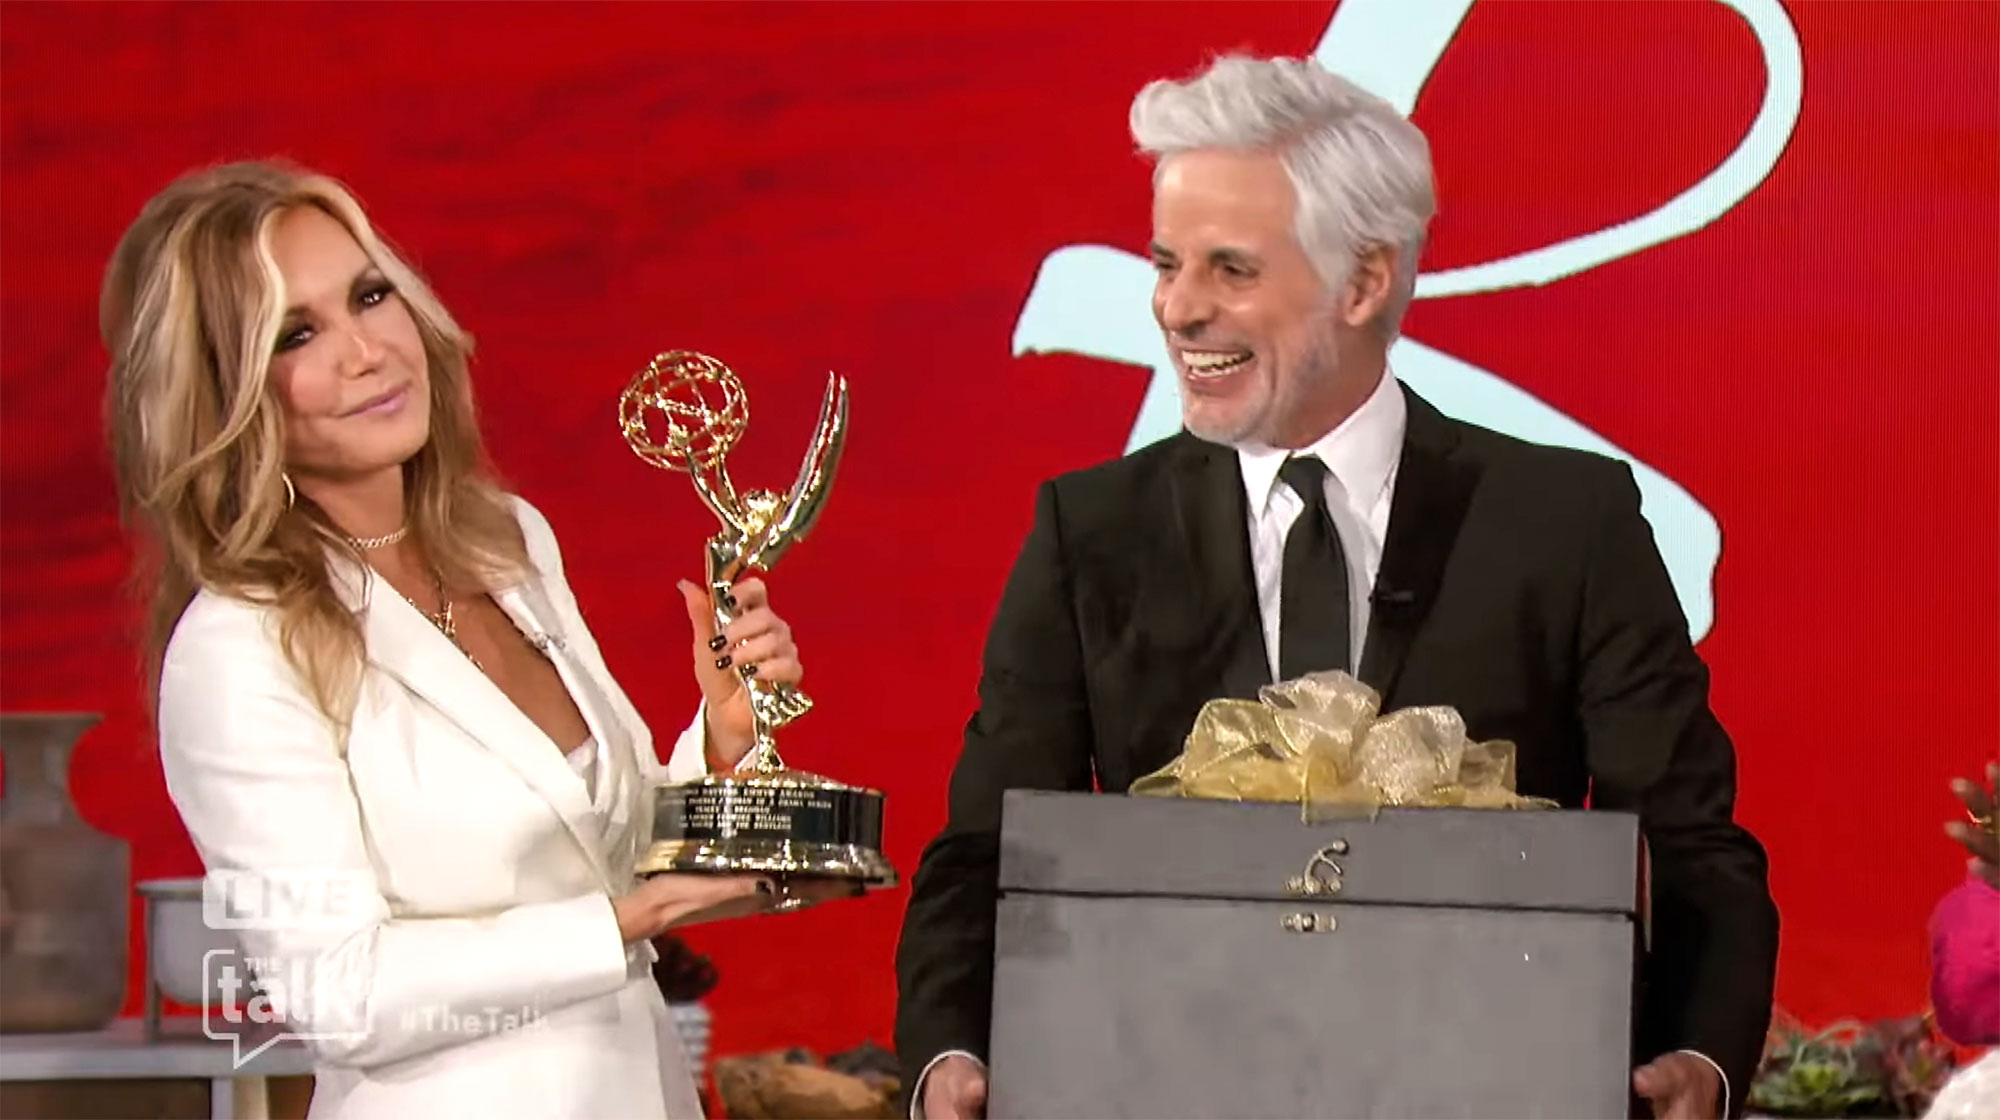 Tracey E Bregman holding her new Emmy Award beside Christian LeBlanc who's holding a big black gift box